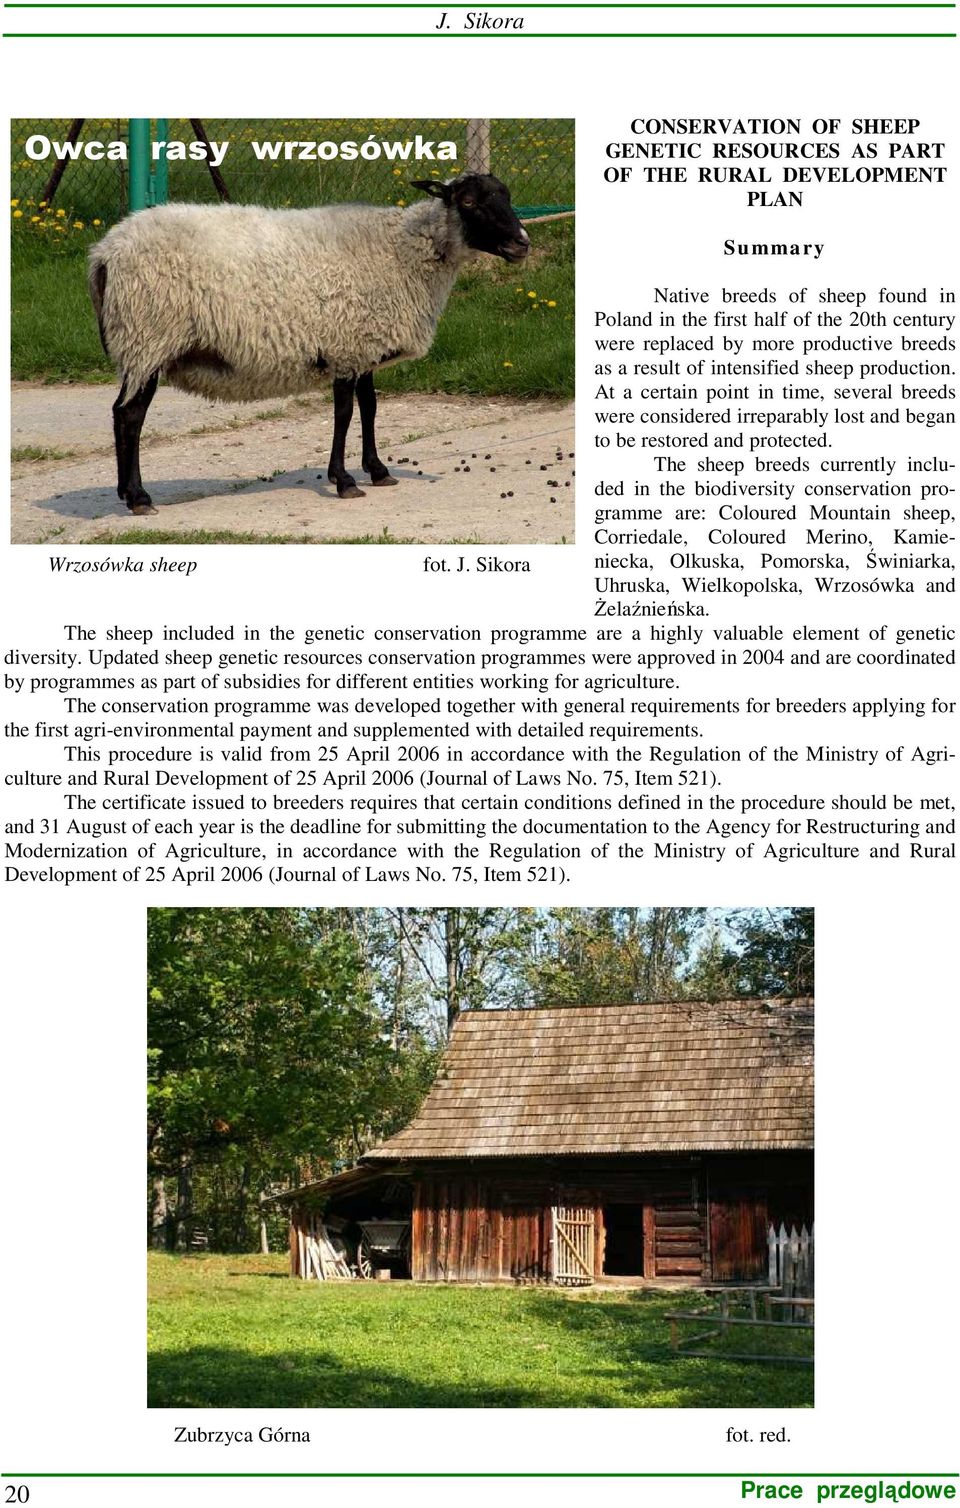 The sheep breeds currently included in the biodiversity conservation programme are: Coloured Mountain sheep, Corriedale, Coloured Merino, Kamieniecka, Olkuska, Pomorska, Świniarka, Wrzosówka sheep